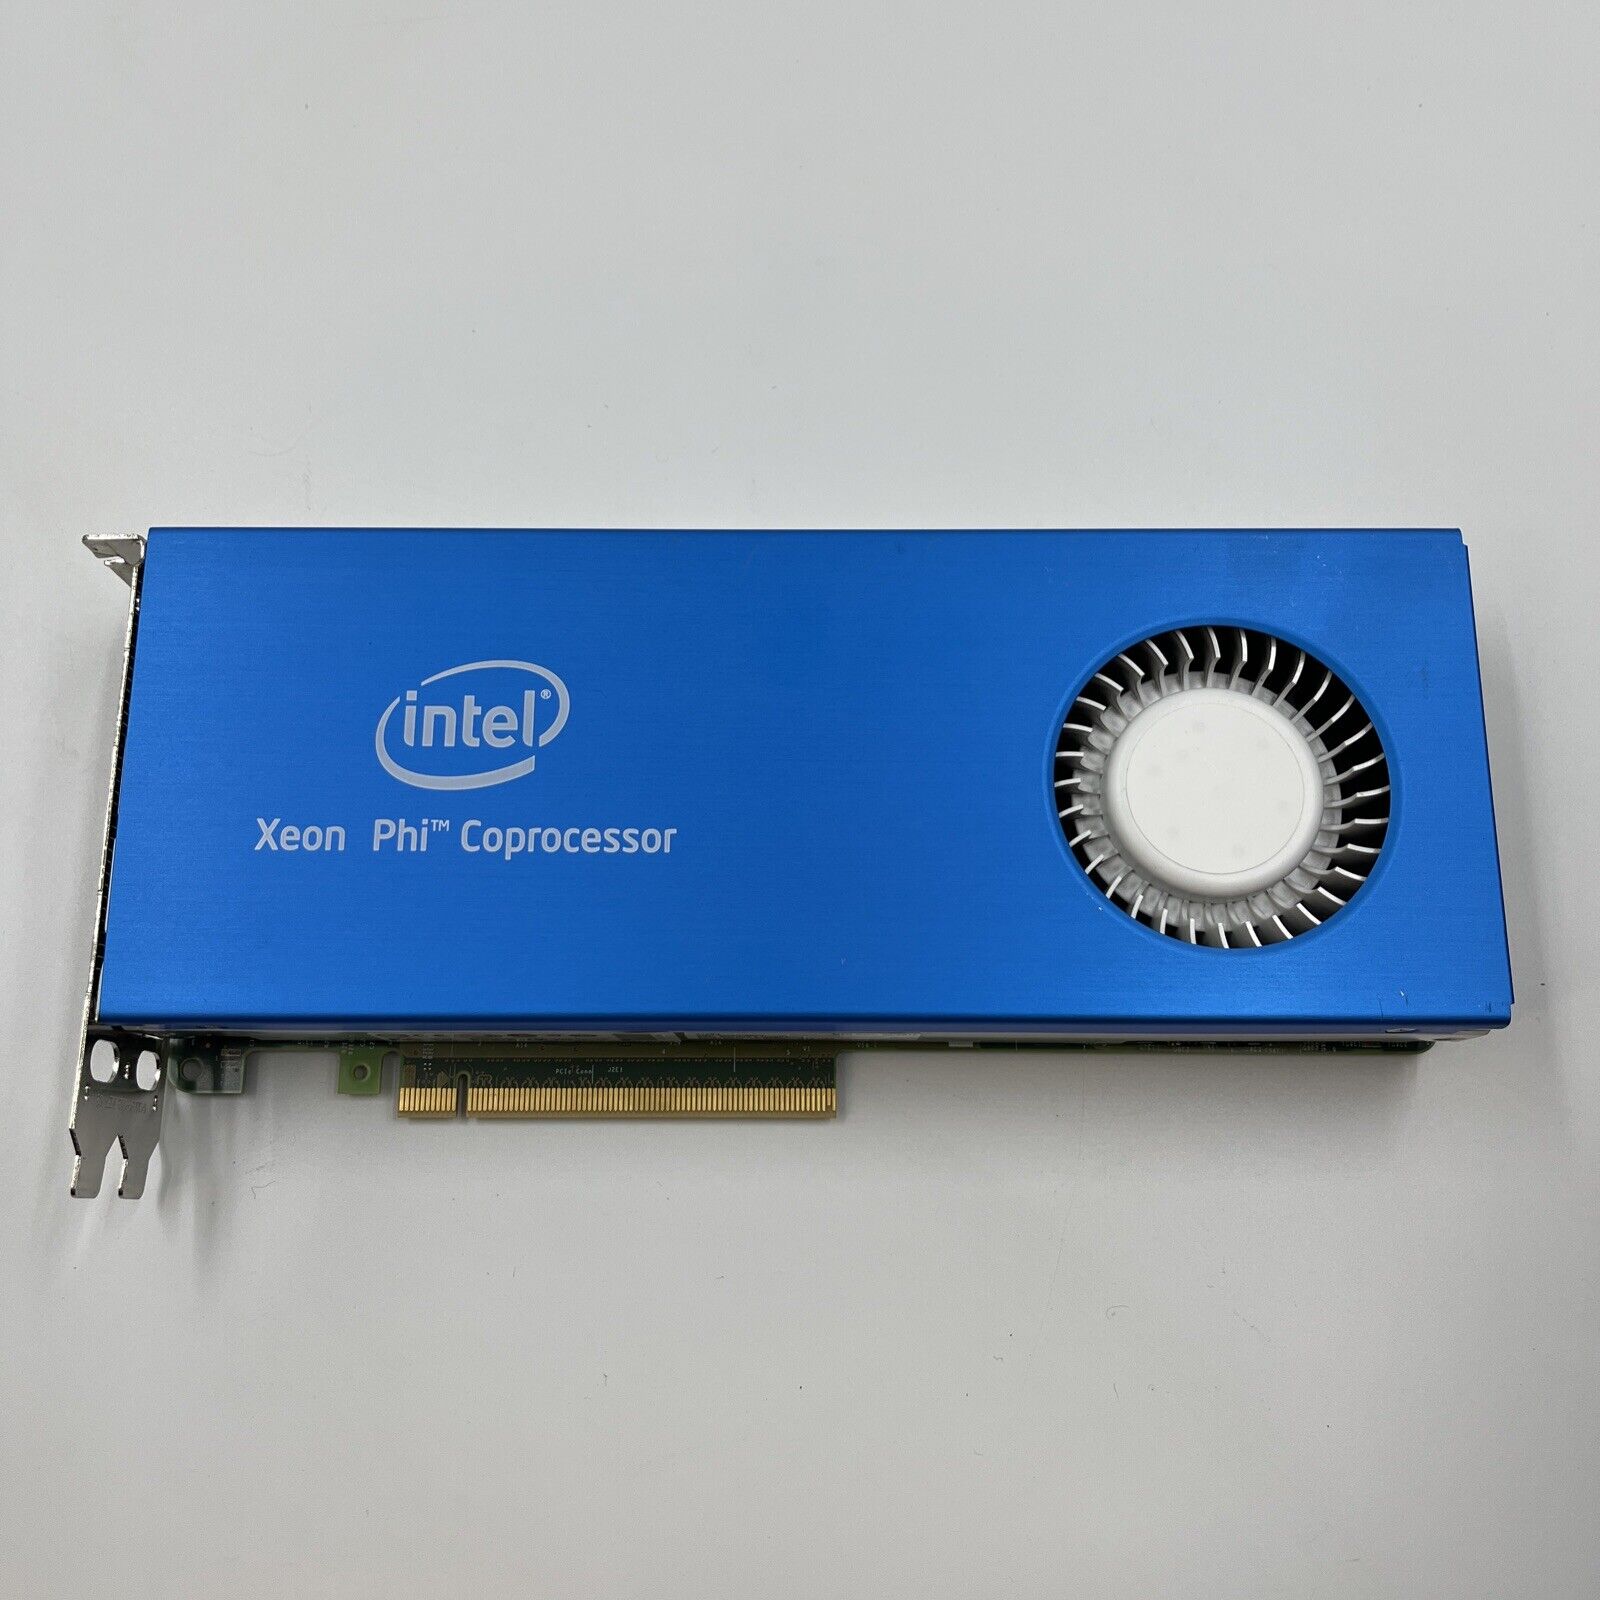 0HKGX1 For Dell Intel Xeon Phi 3120A 6GB 1.1Ghz 57-Core Server Coprocessor Card